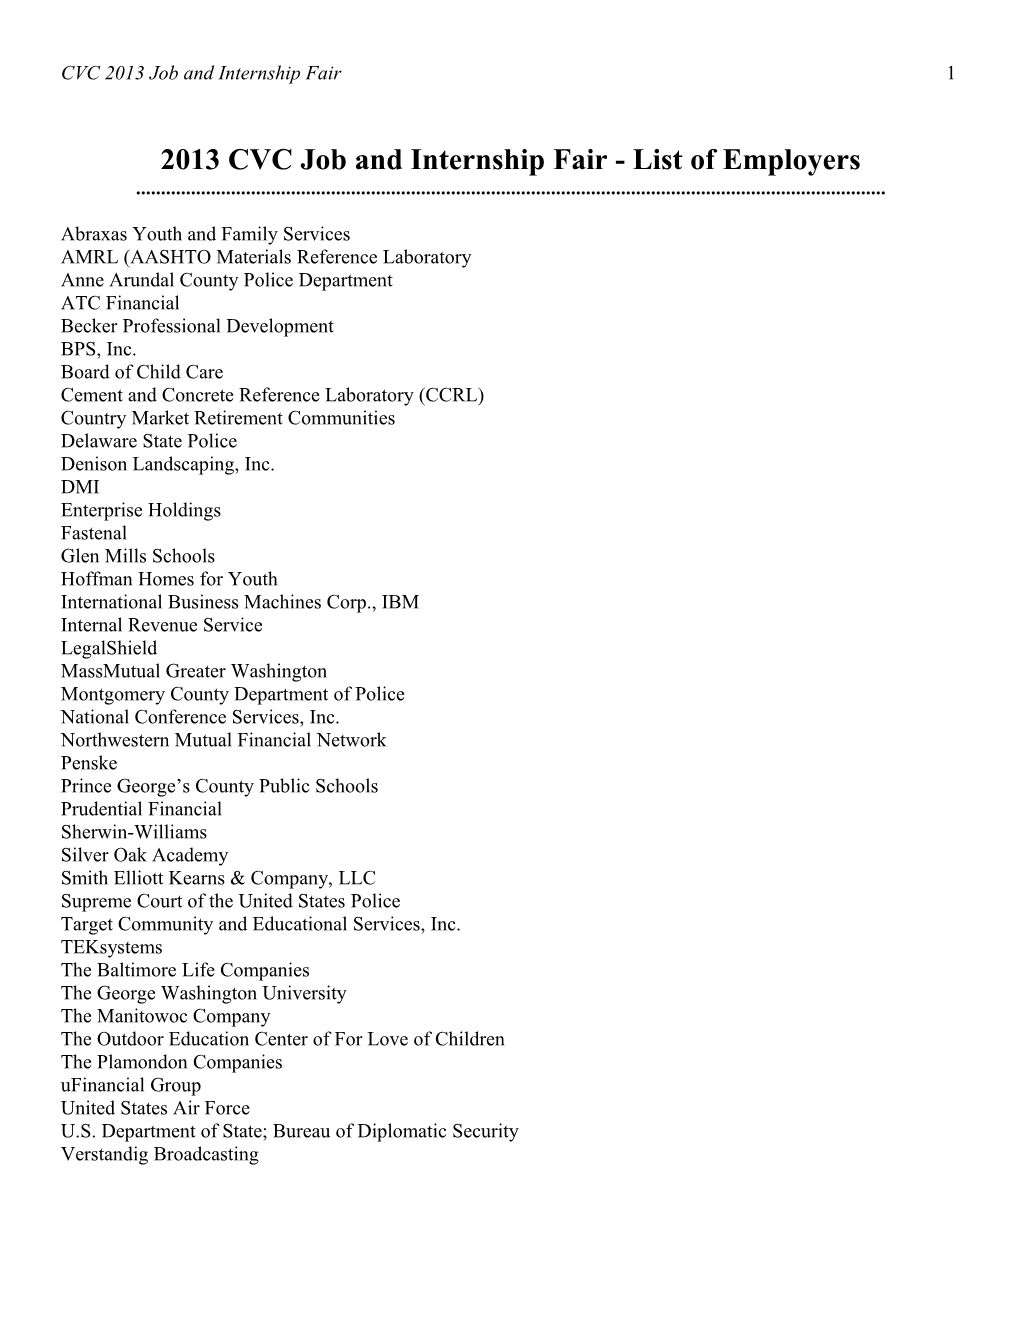 2013 CVC Job and Internship Fair - List of Employers